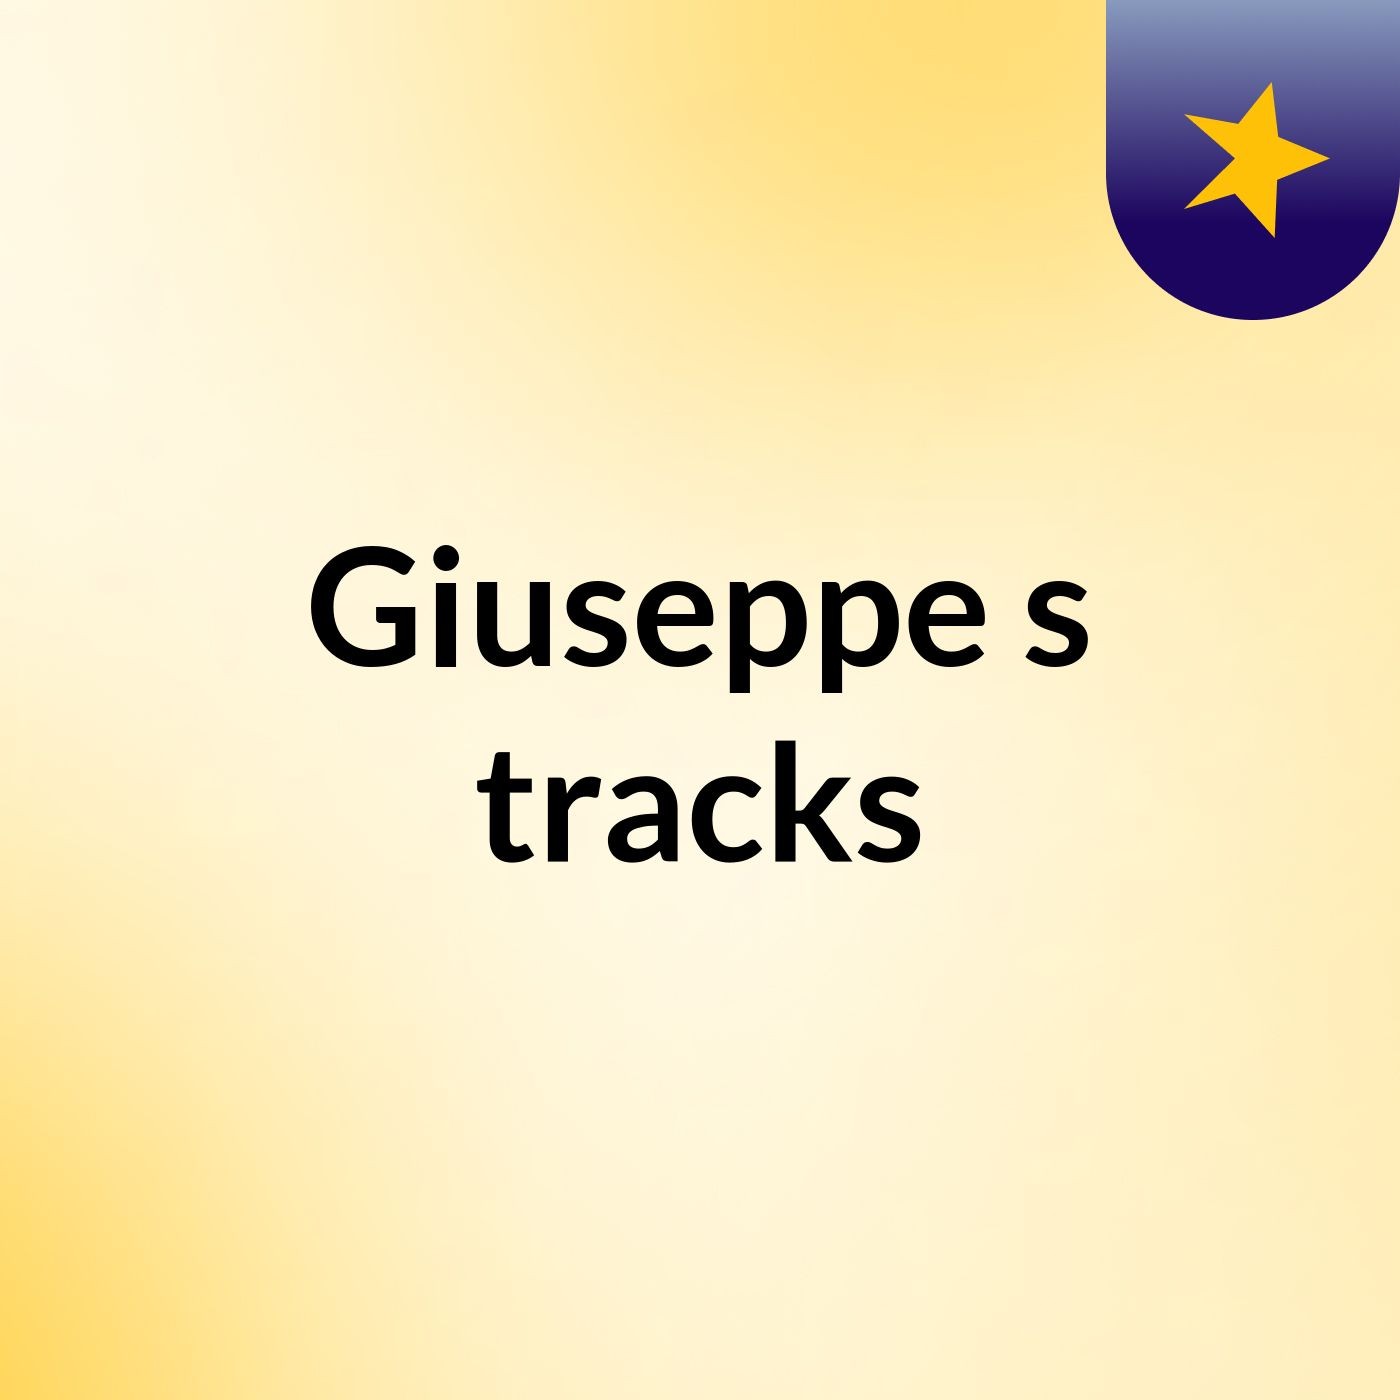 Giuseppe's tracks